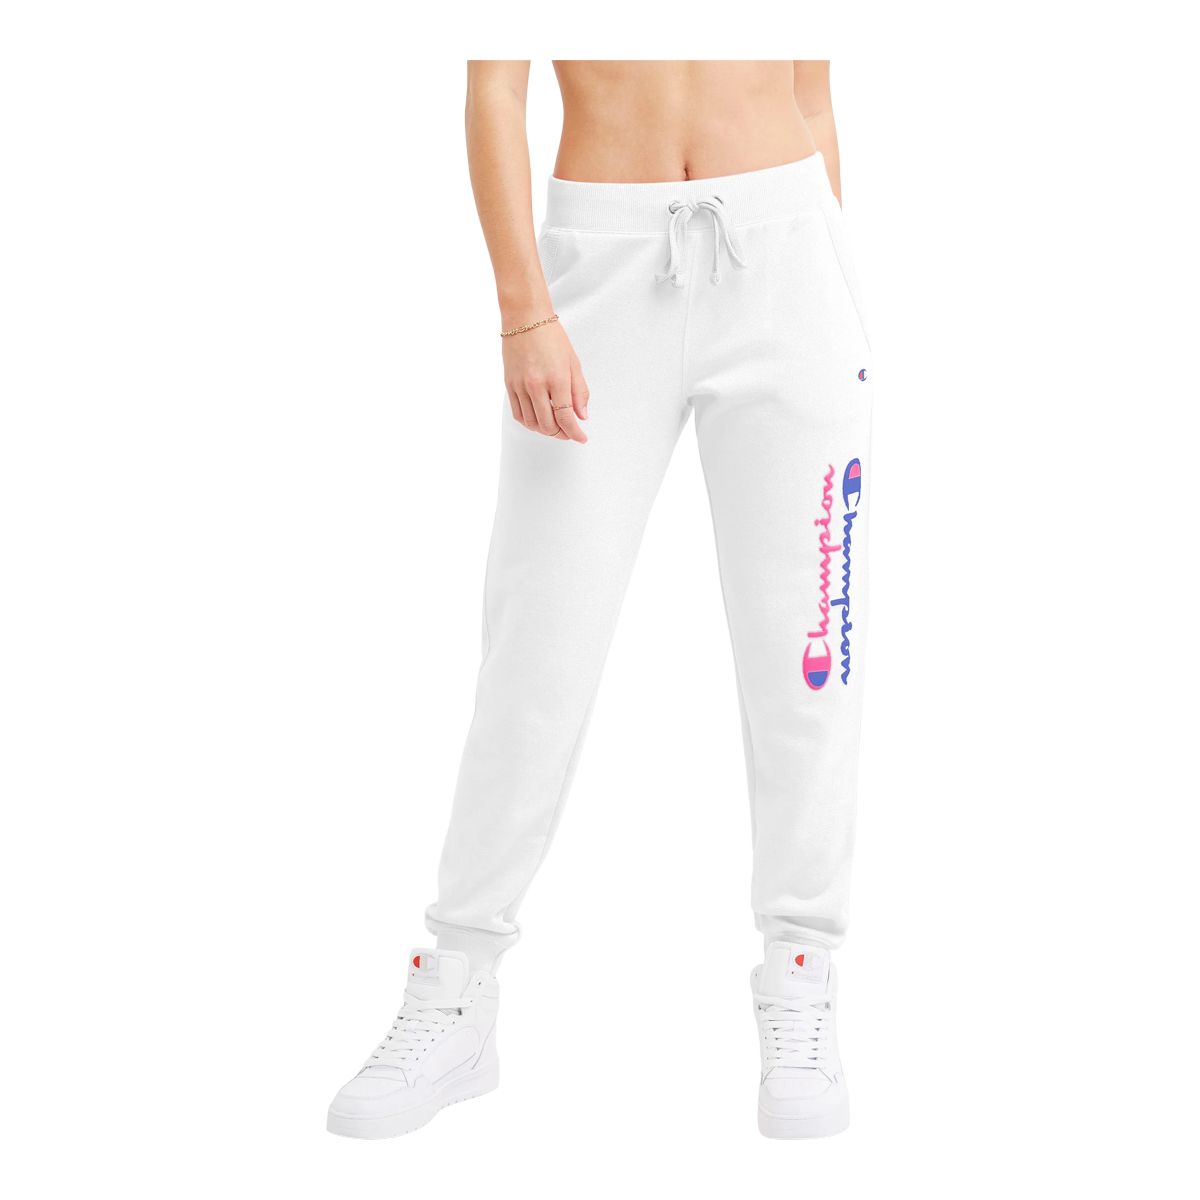 Nike Women's One Thermafit Pants